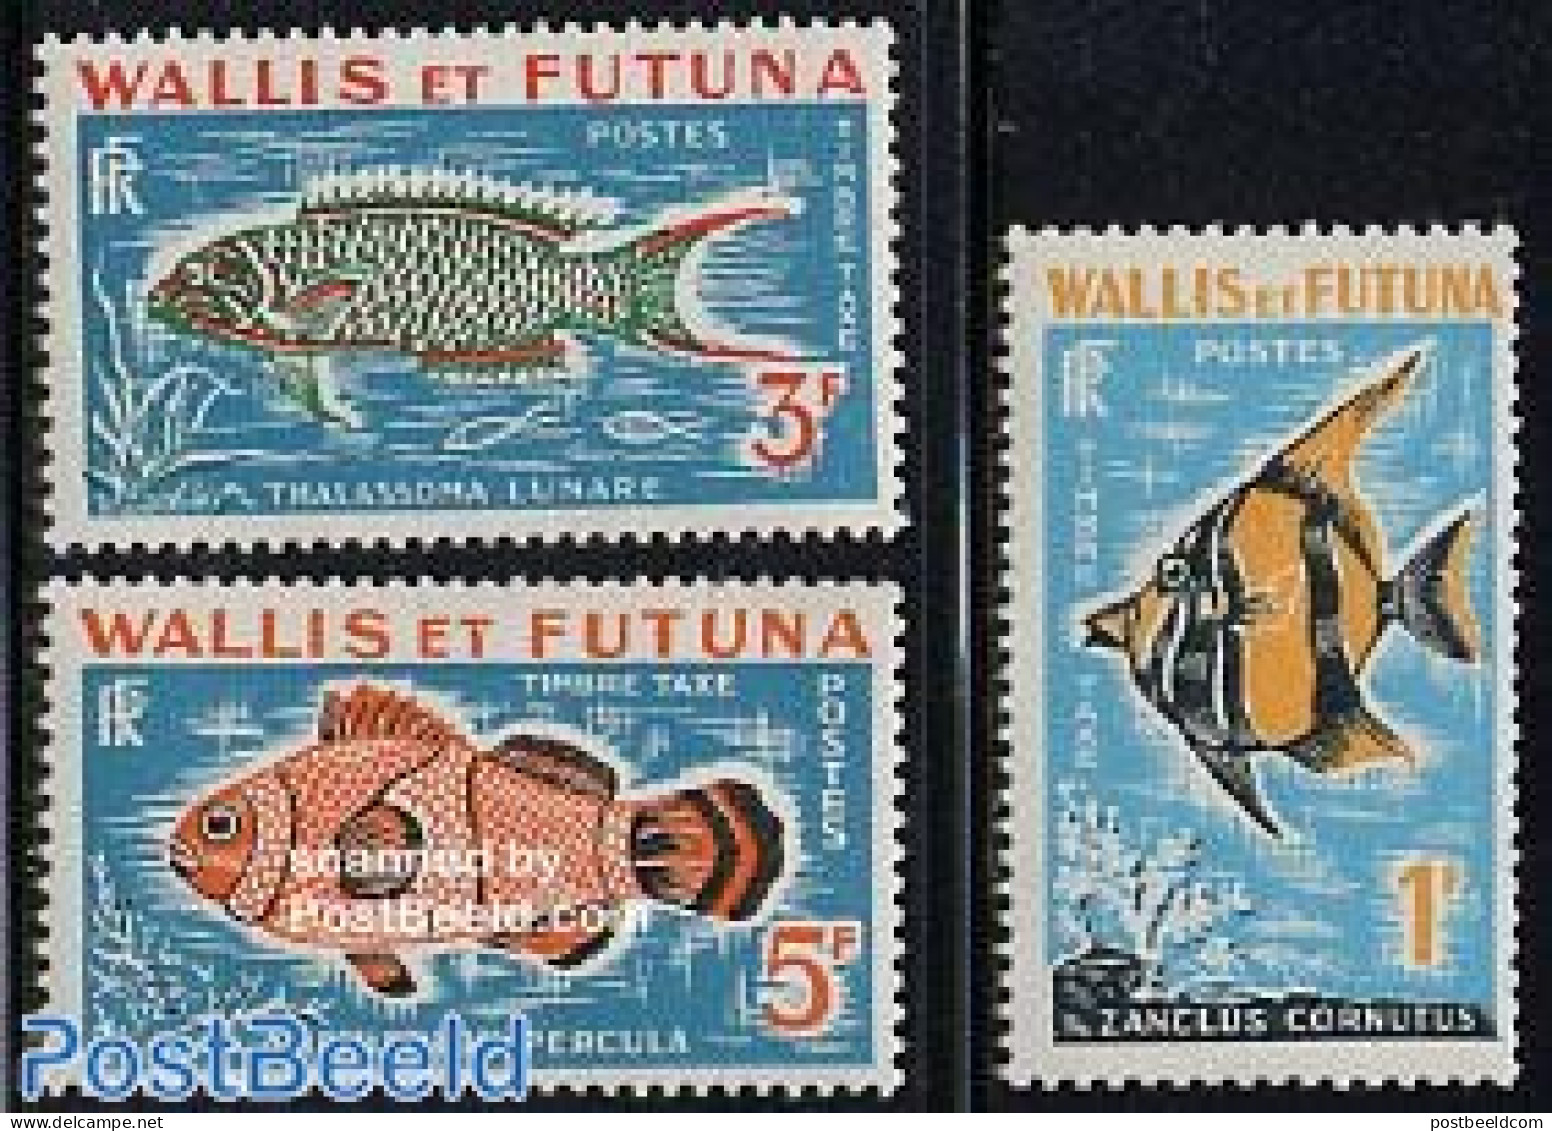 Wallis & Futuna 1963 Postage Due, Fish 3v, Mint NH, Nature - Fish - Poissons